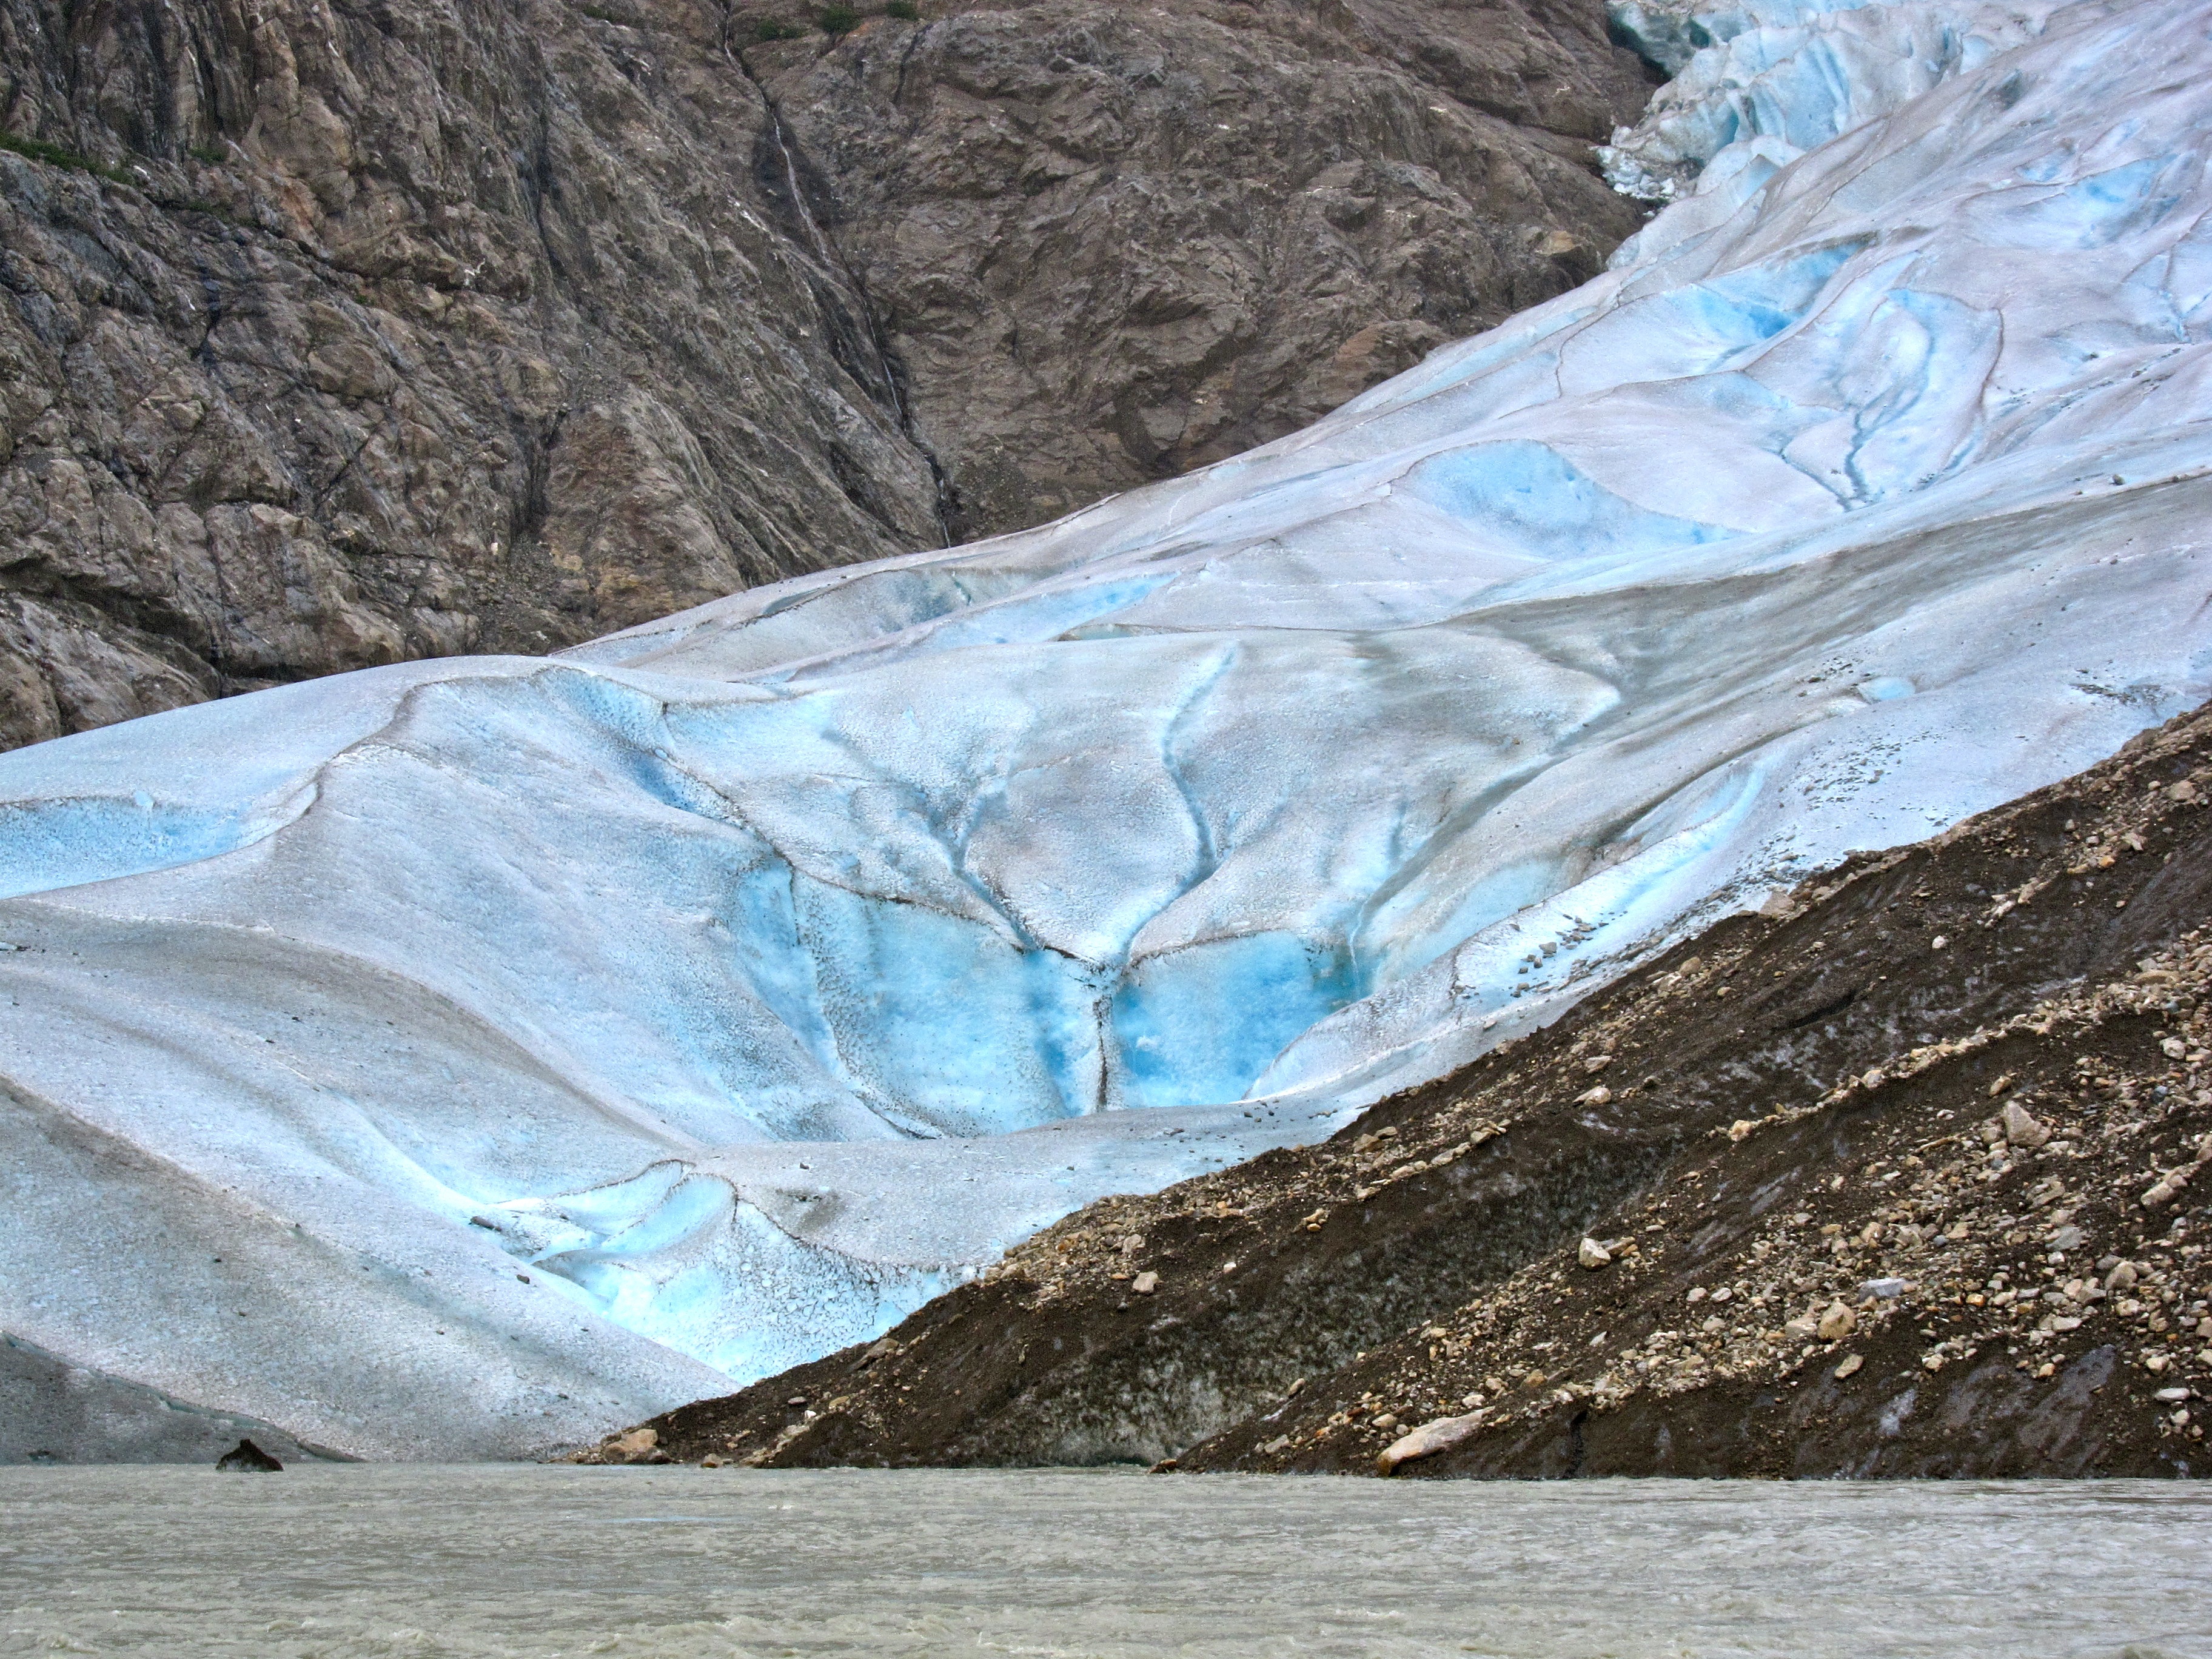 The Davis Glacier